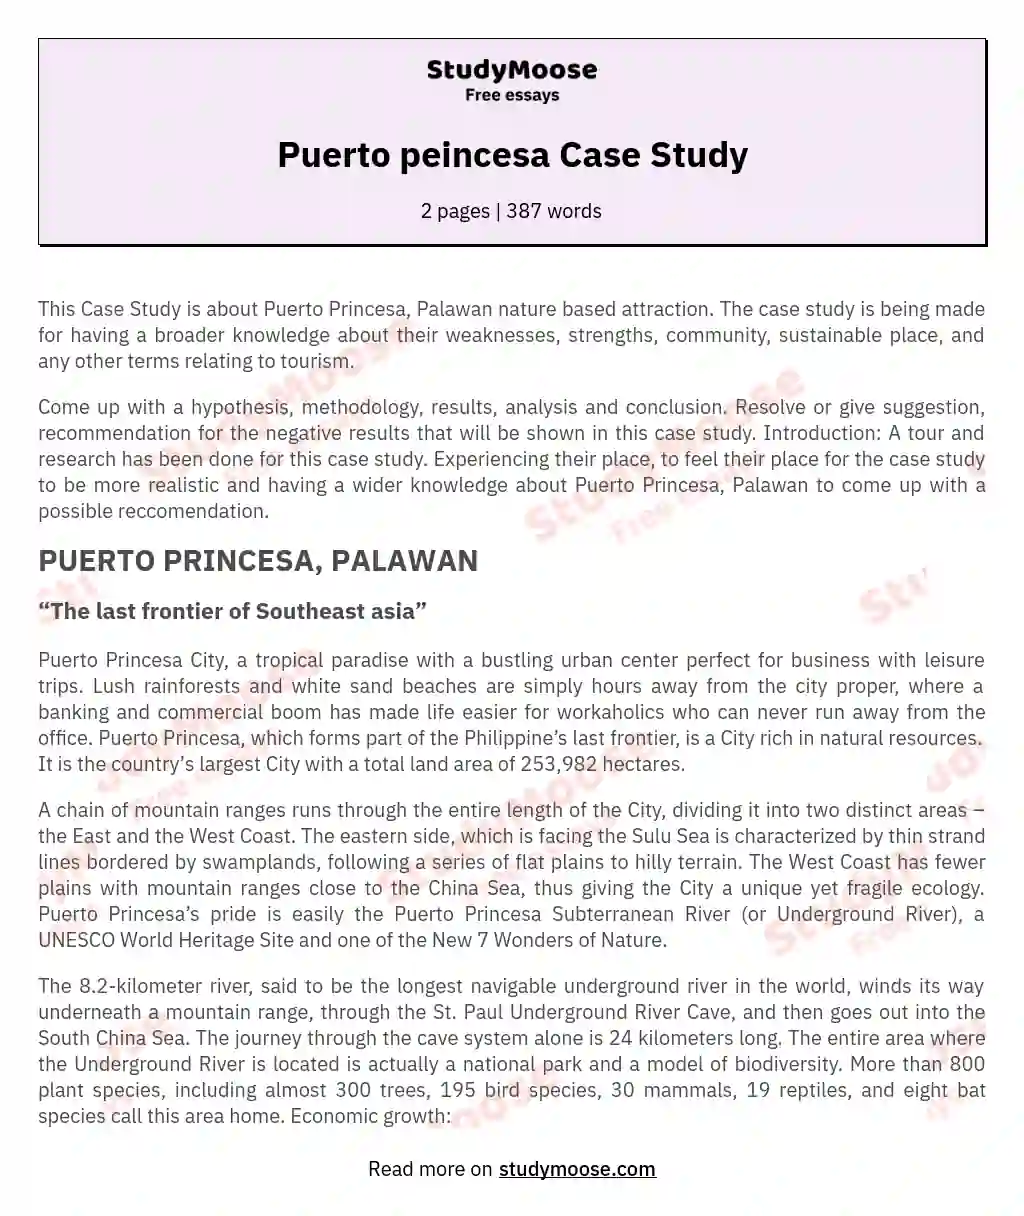 Puerto peincesa Case Study essay